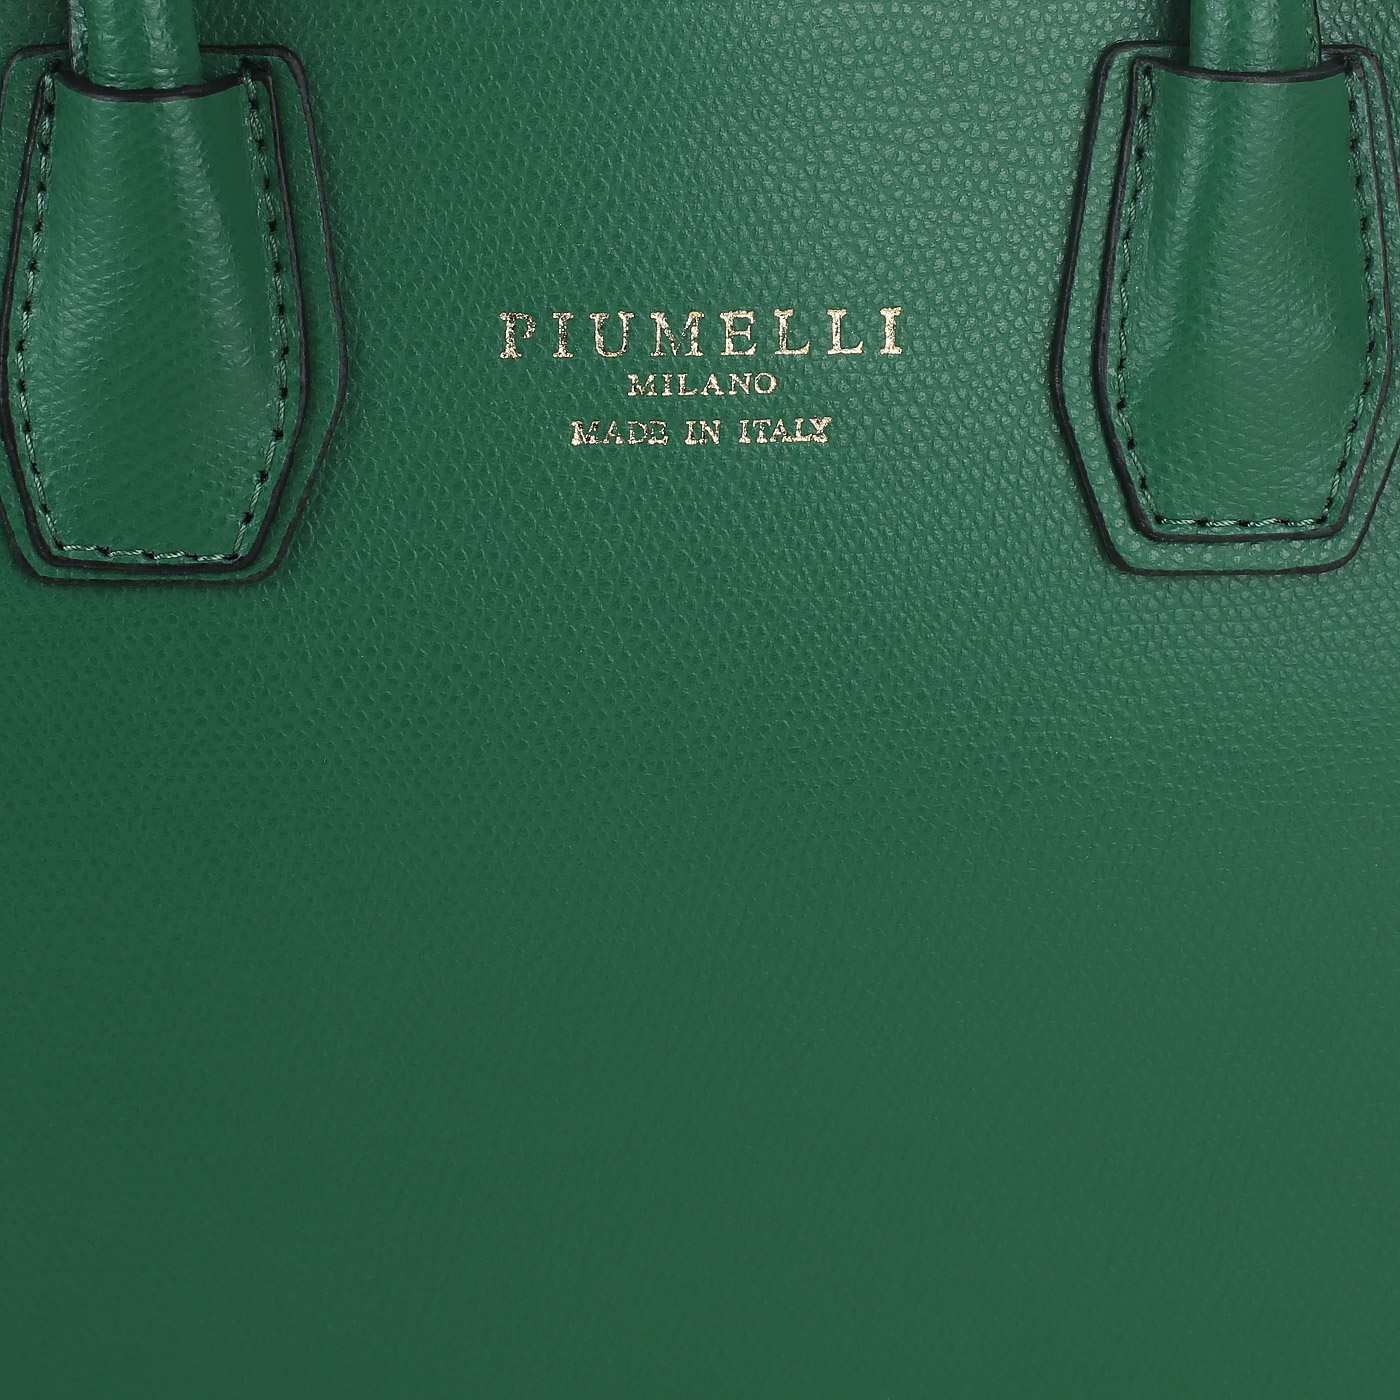 Кожаная сумка Piumelli Ophelia